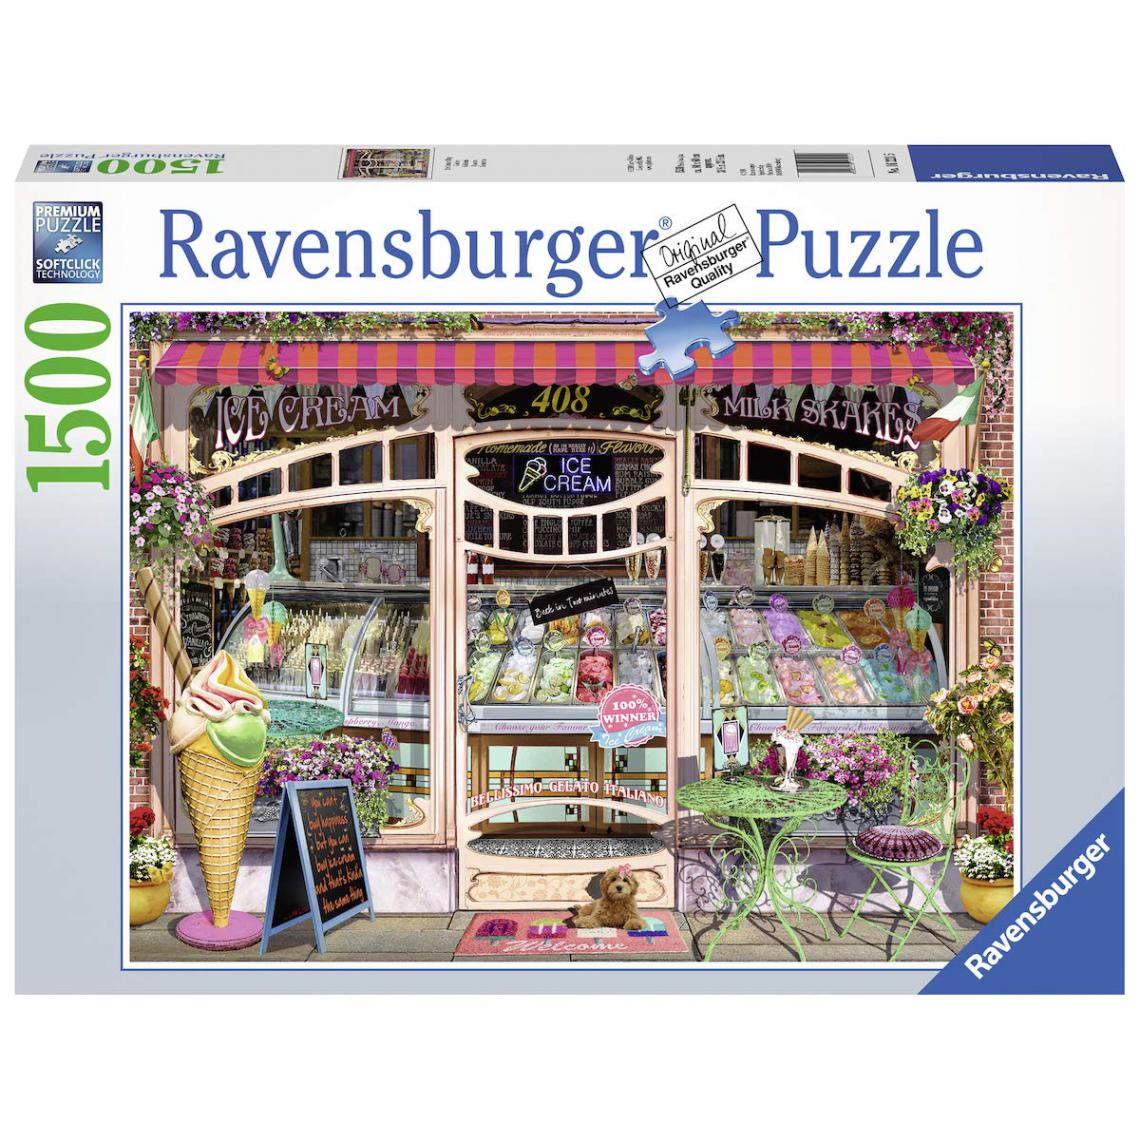 Inconnu - Ravensburger 16221 Neuschwanstein Impressions, 1500 pièces Puzzle - Animaux